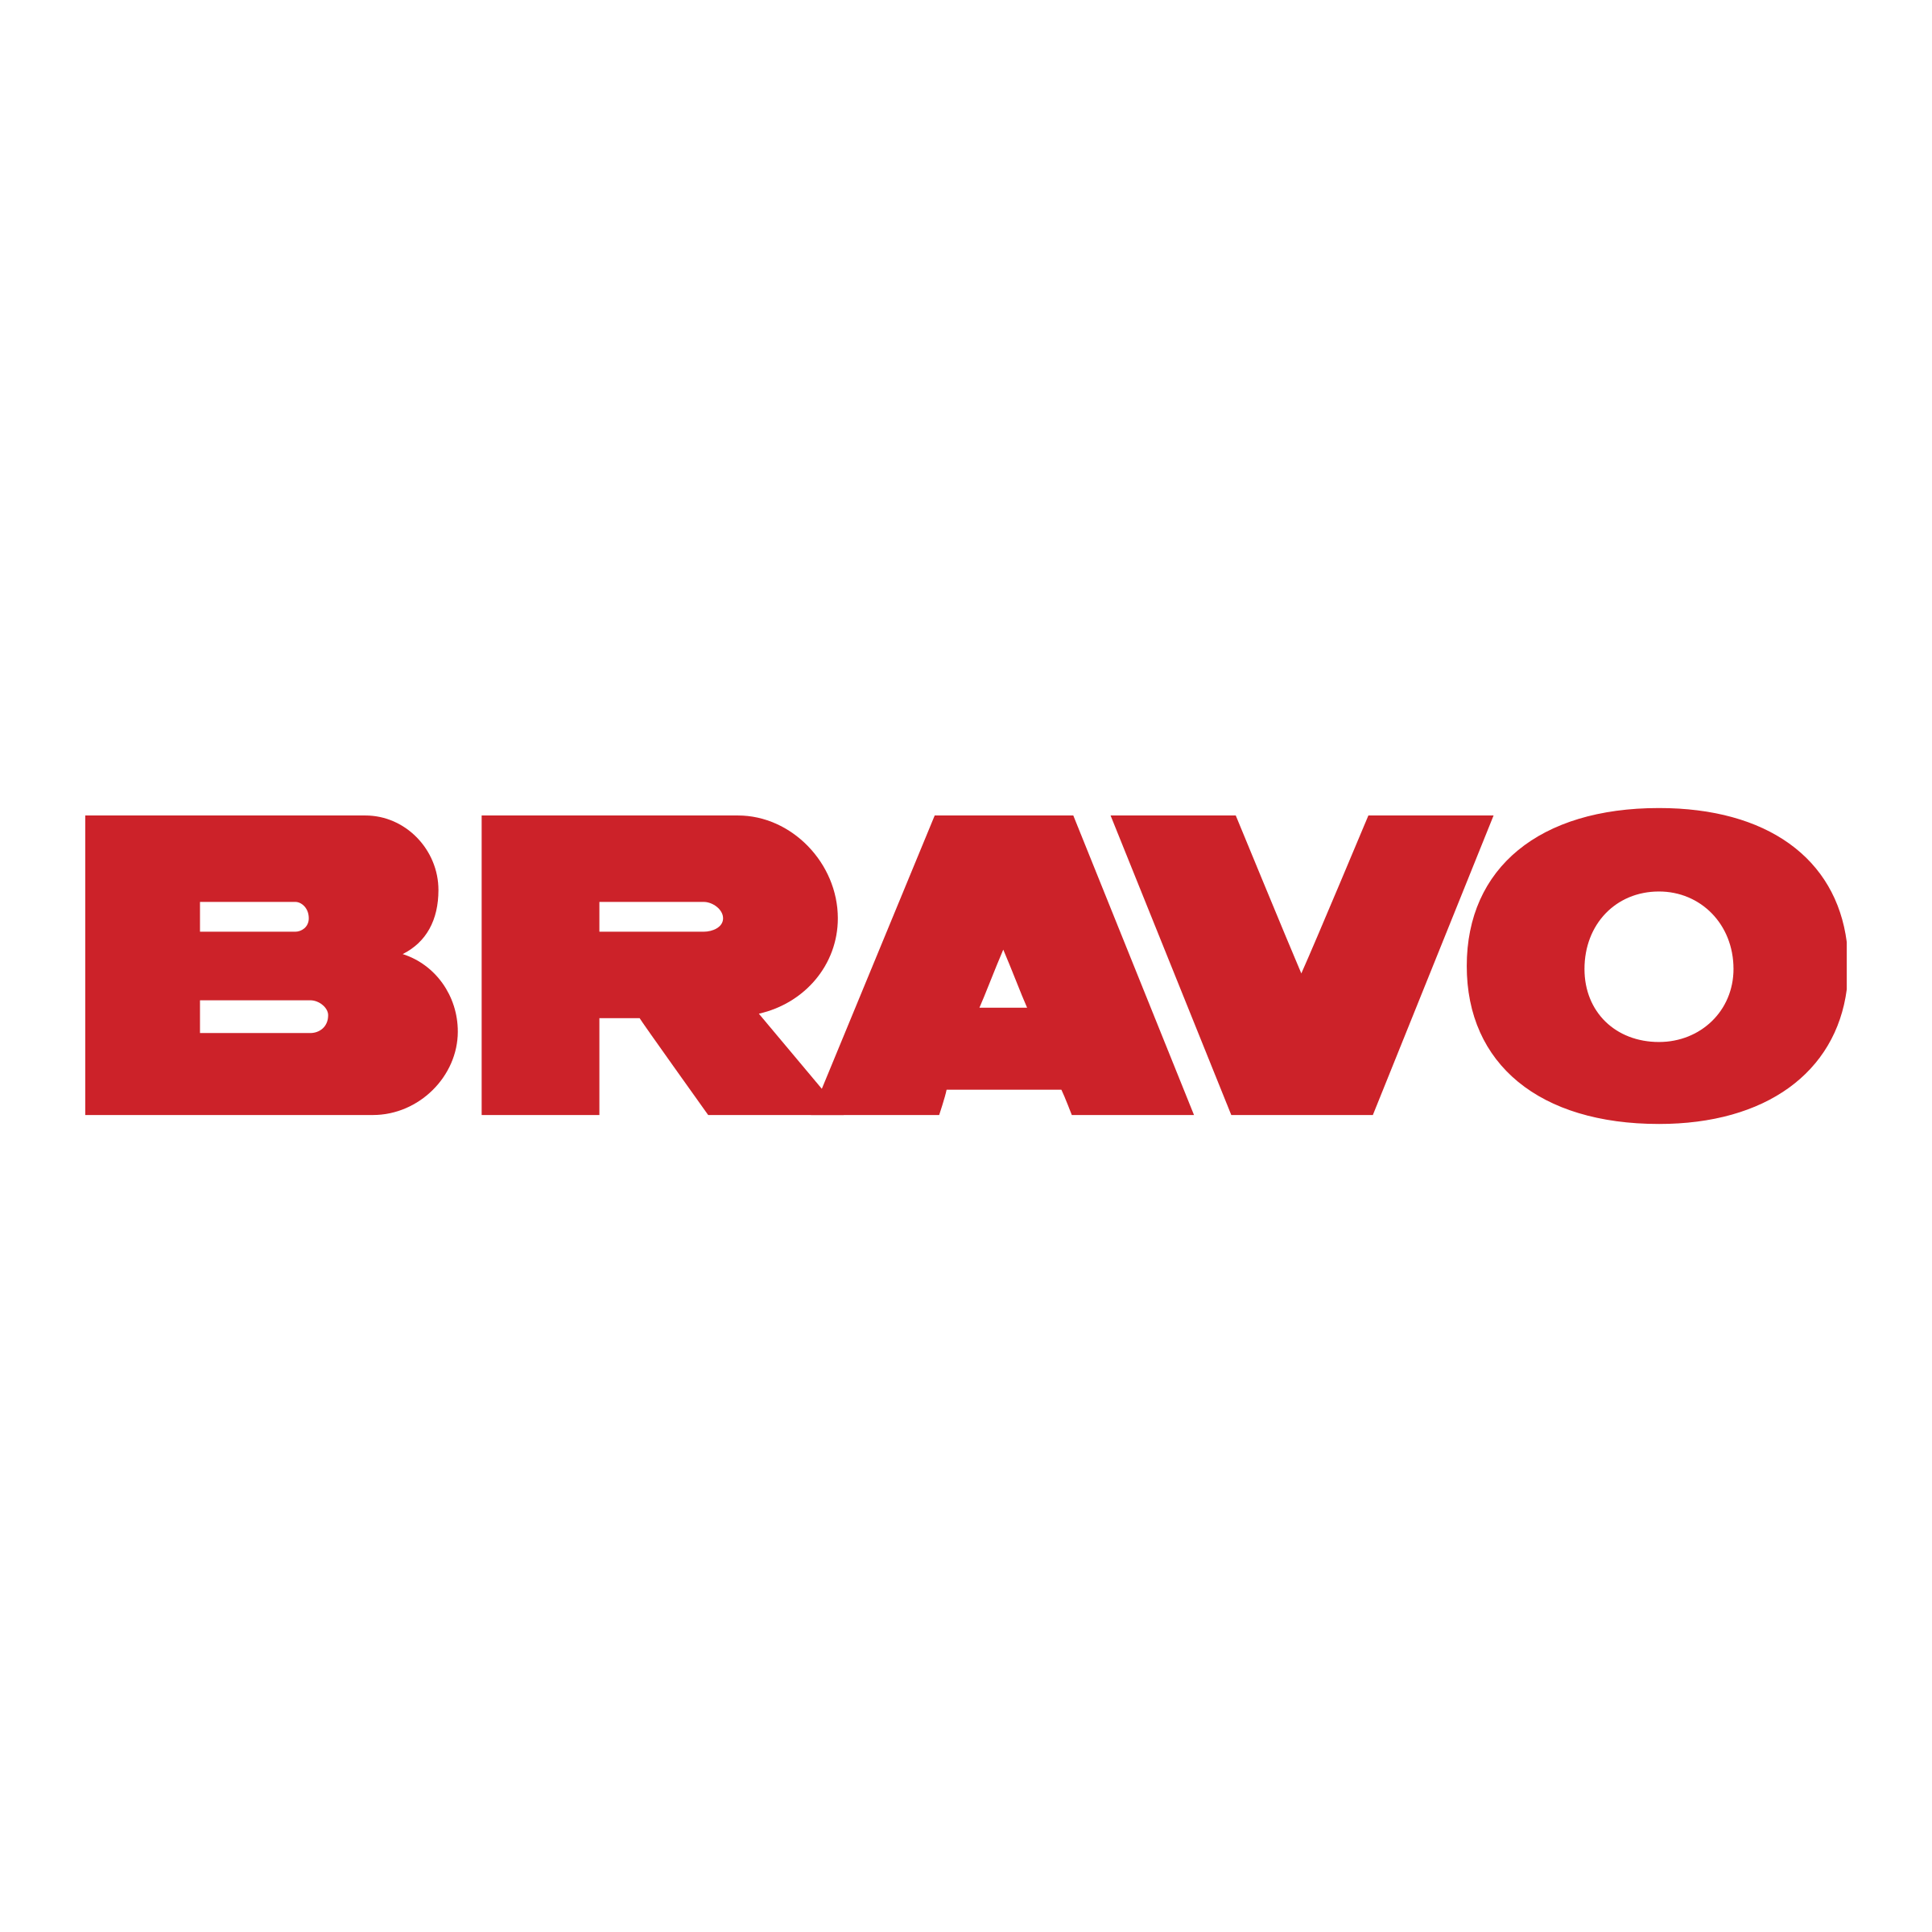 Bravo Logo - Bravo Logo PNG Transparent & SVG Vector